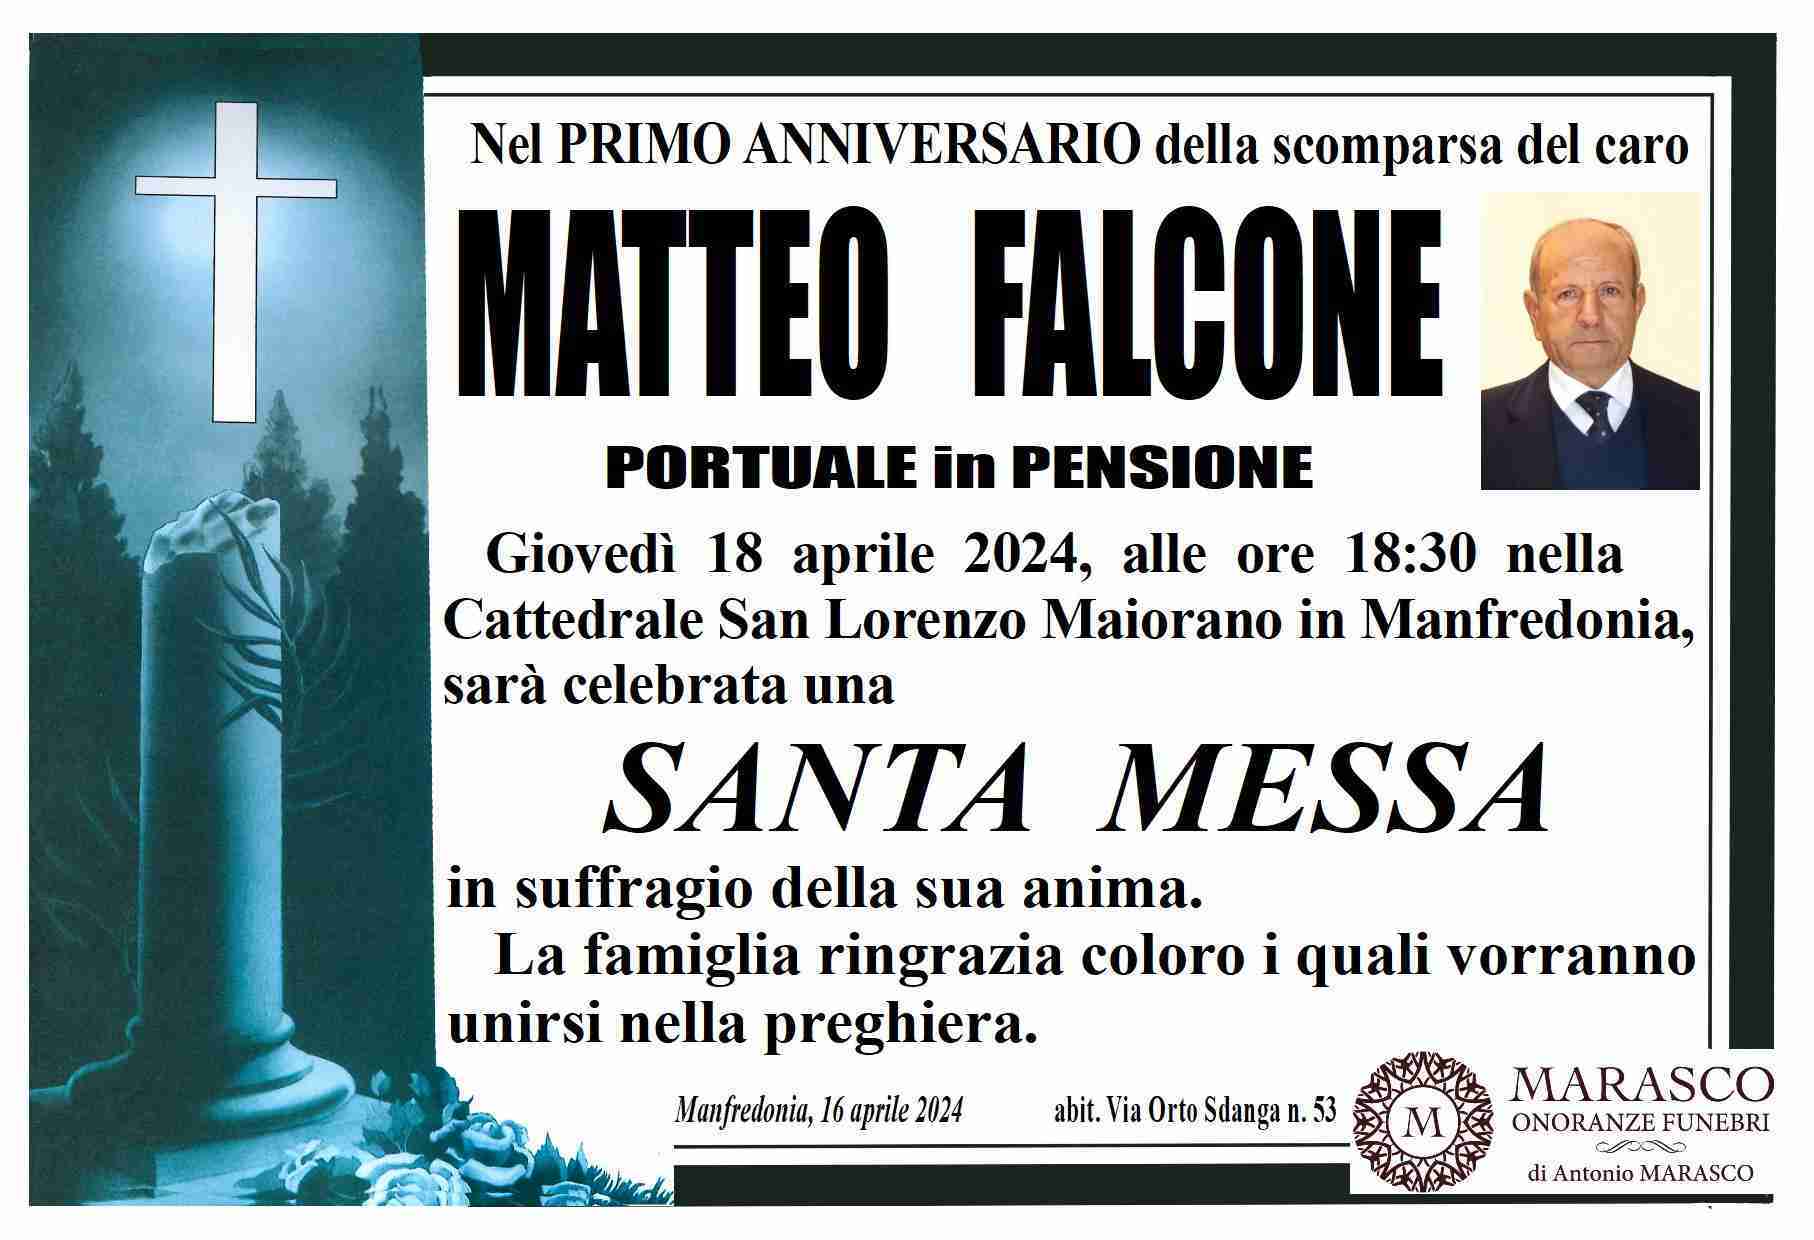 Matteo Falcone